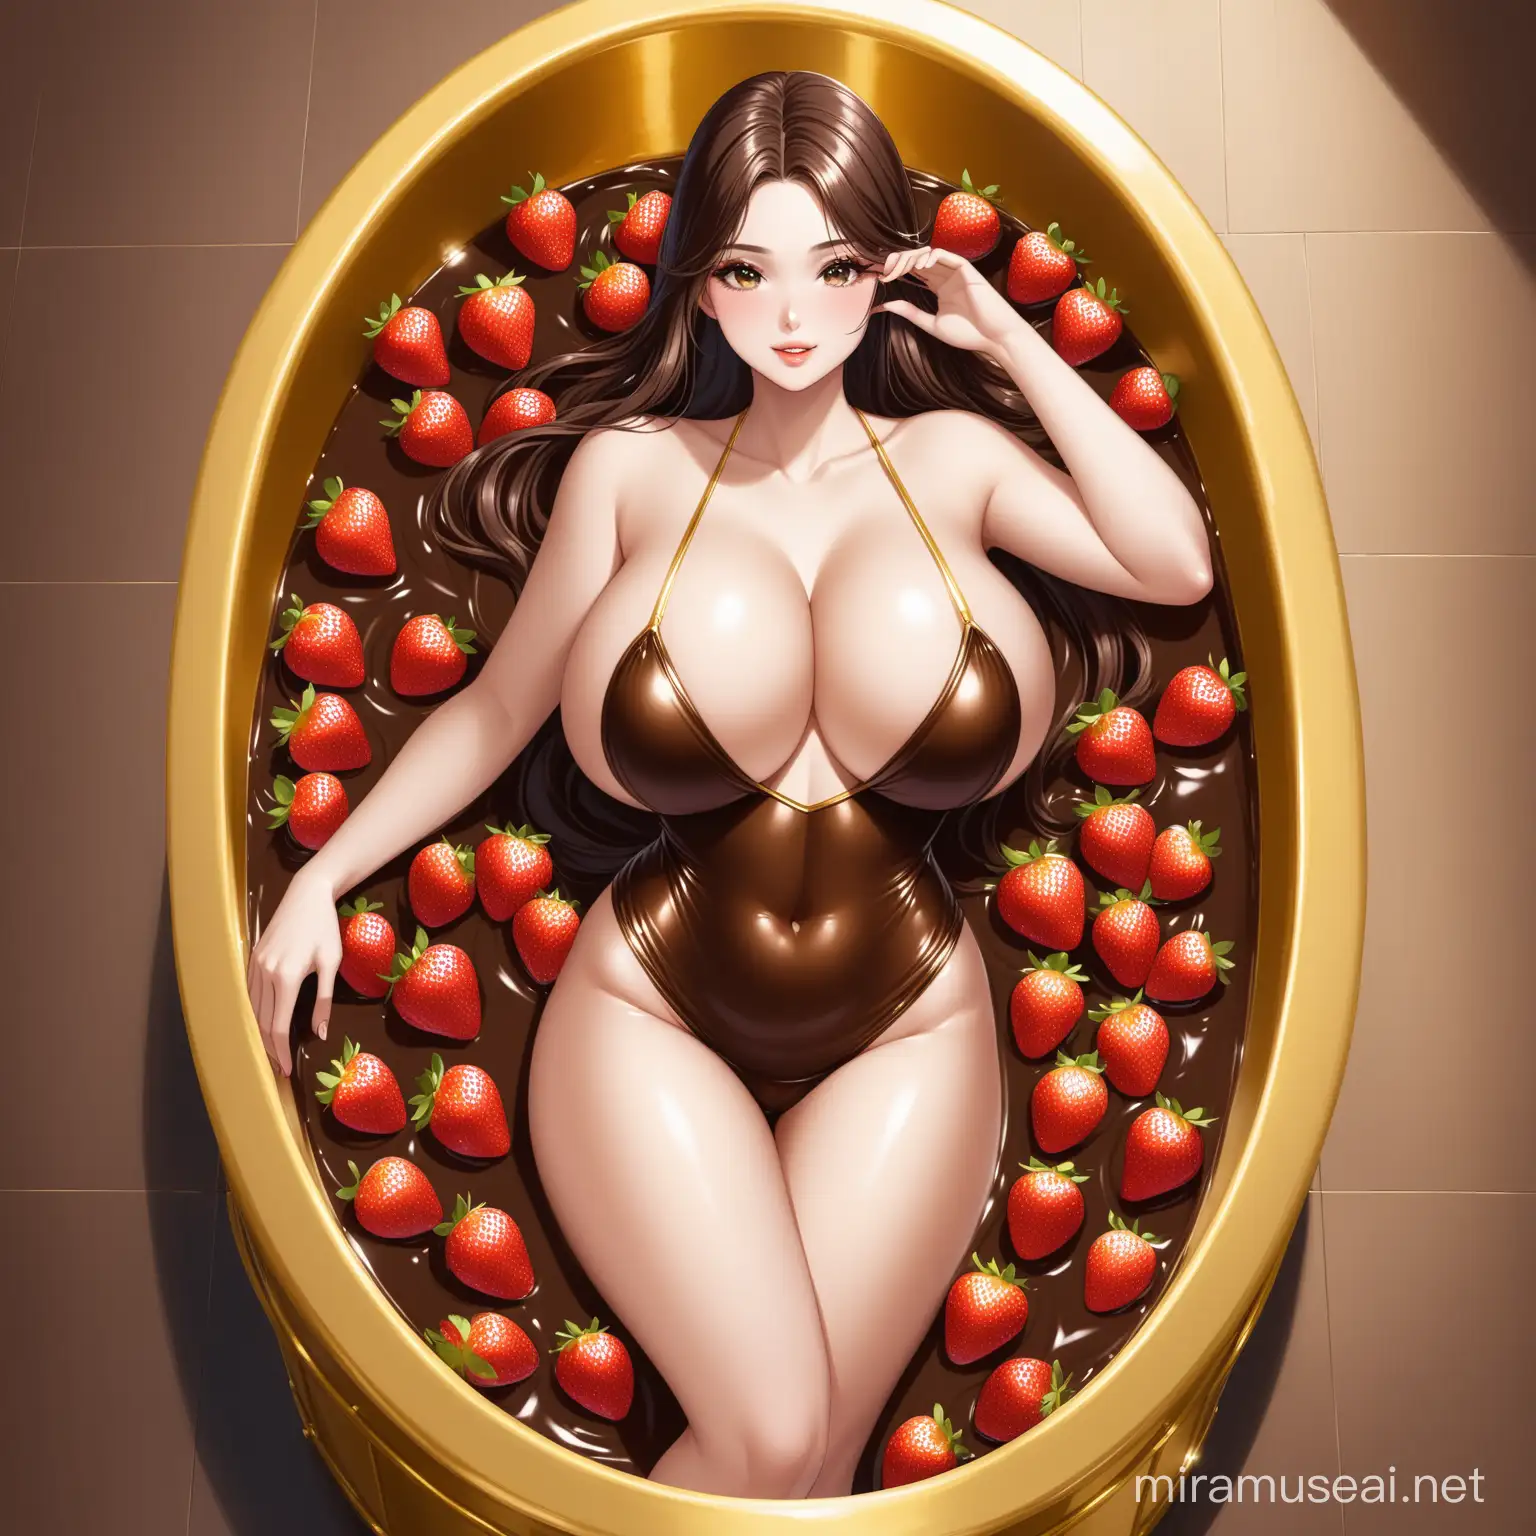 Goddesslike Woman Enjoying Luxurious Chocolate and Strawberry Bath